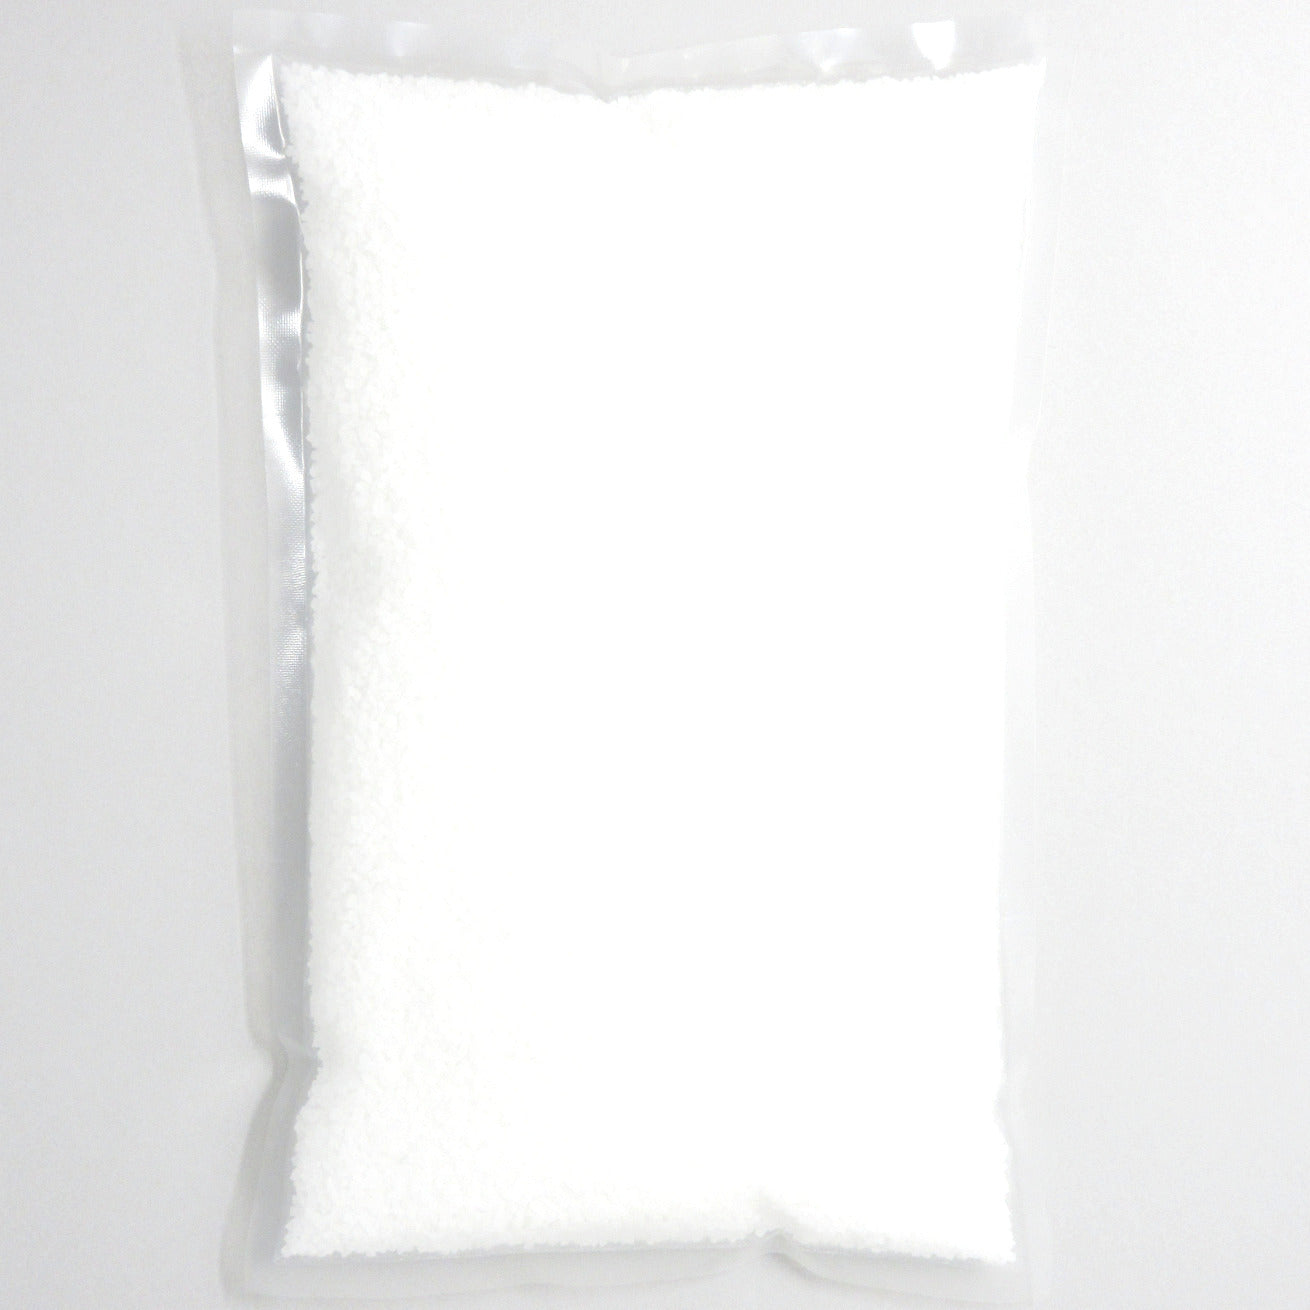 Flour Barrel product image - Coarse Baking Sugar